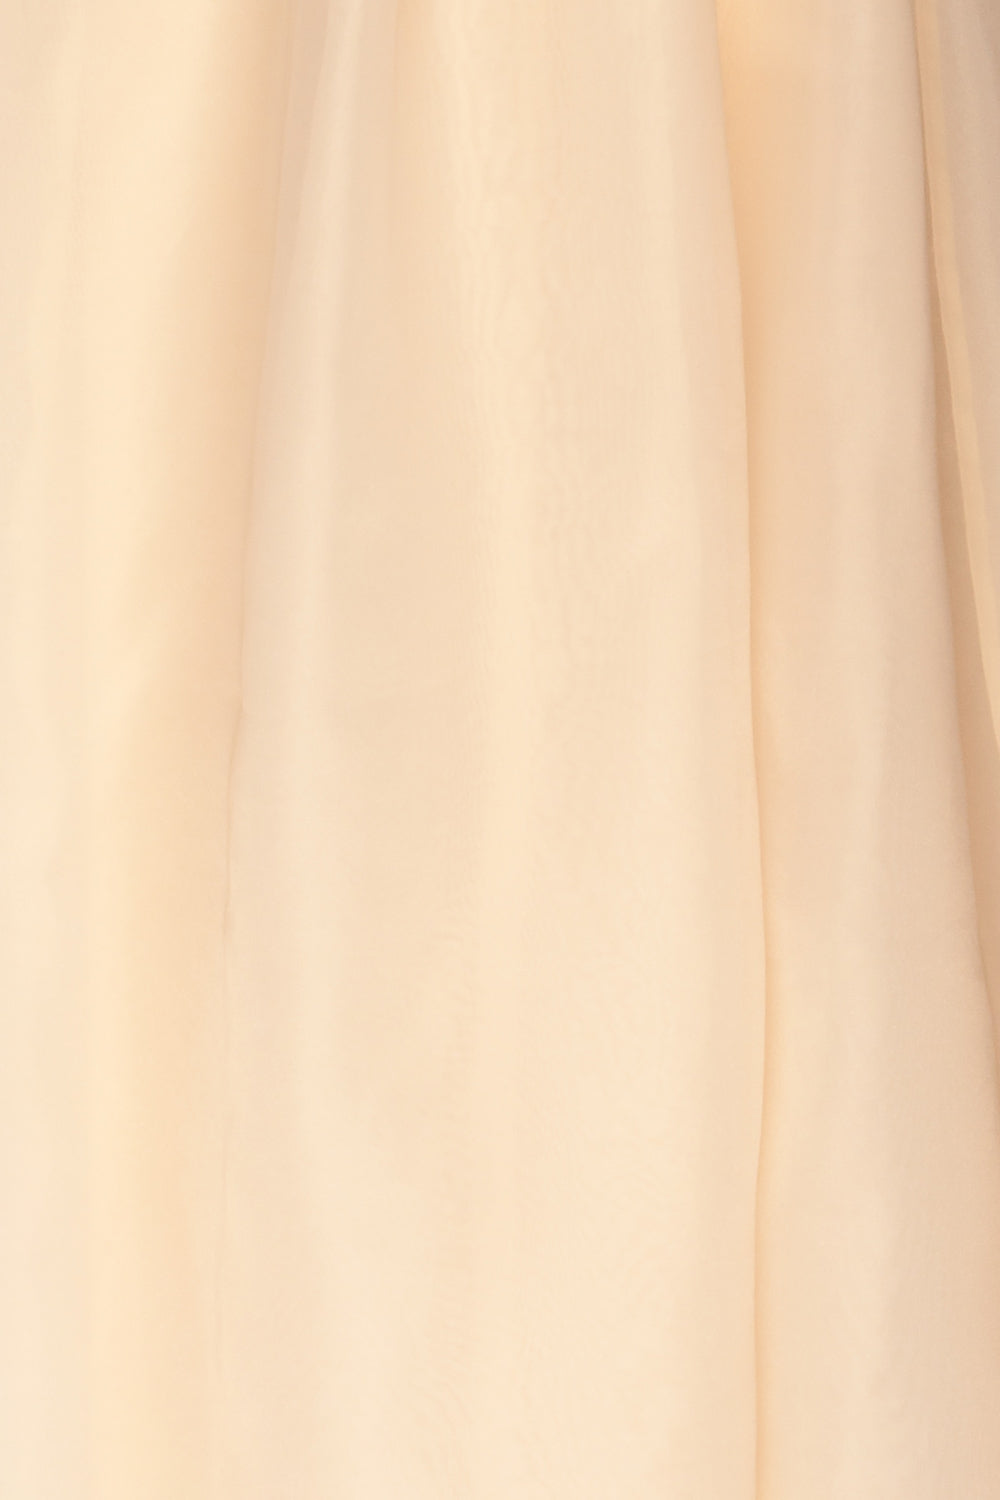 Venosa Beige Strapless Maxi Dress fabric close up | La petite garçonne